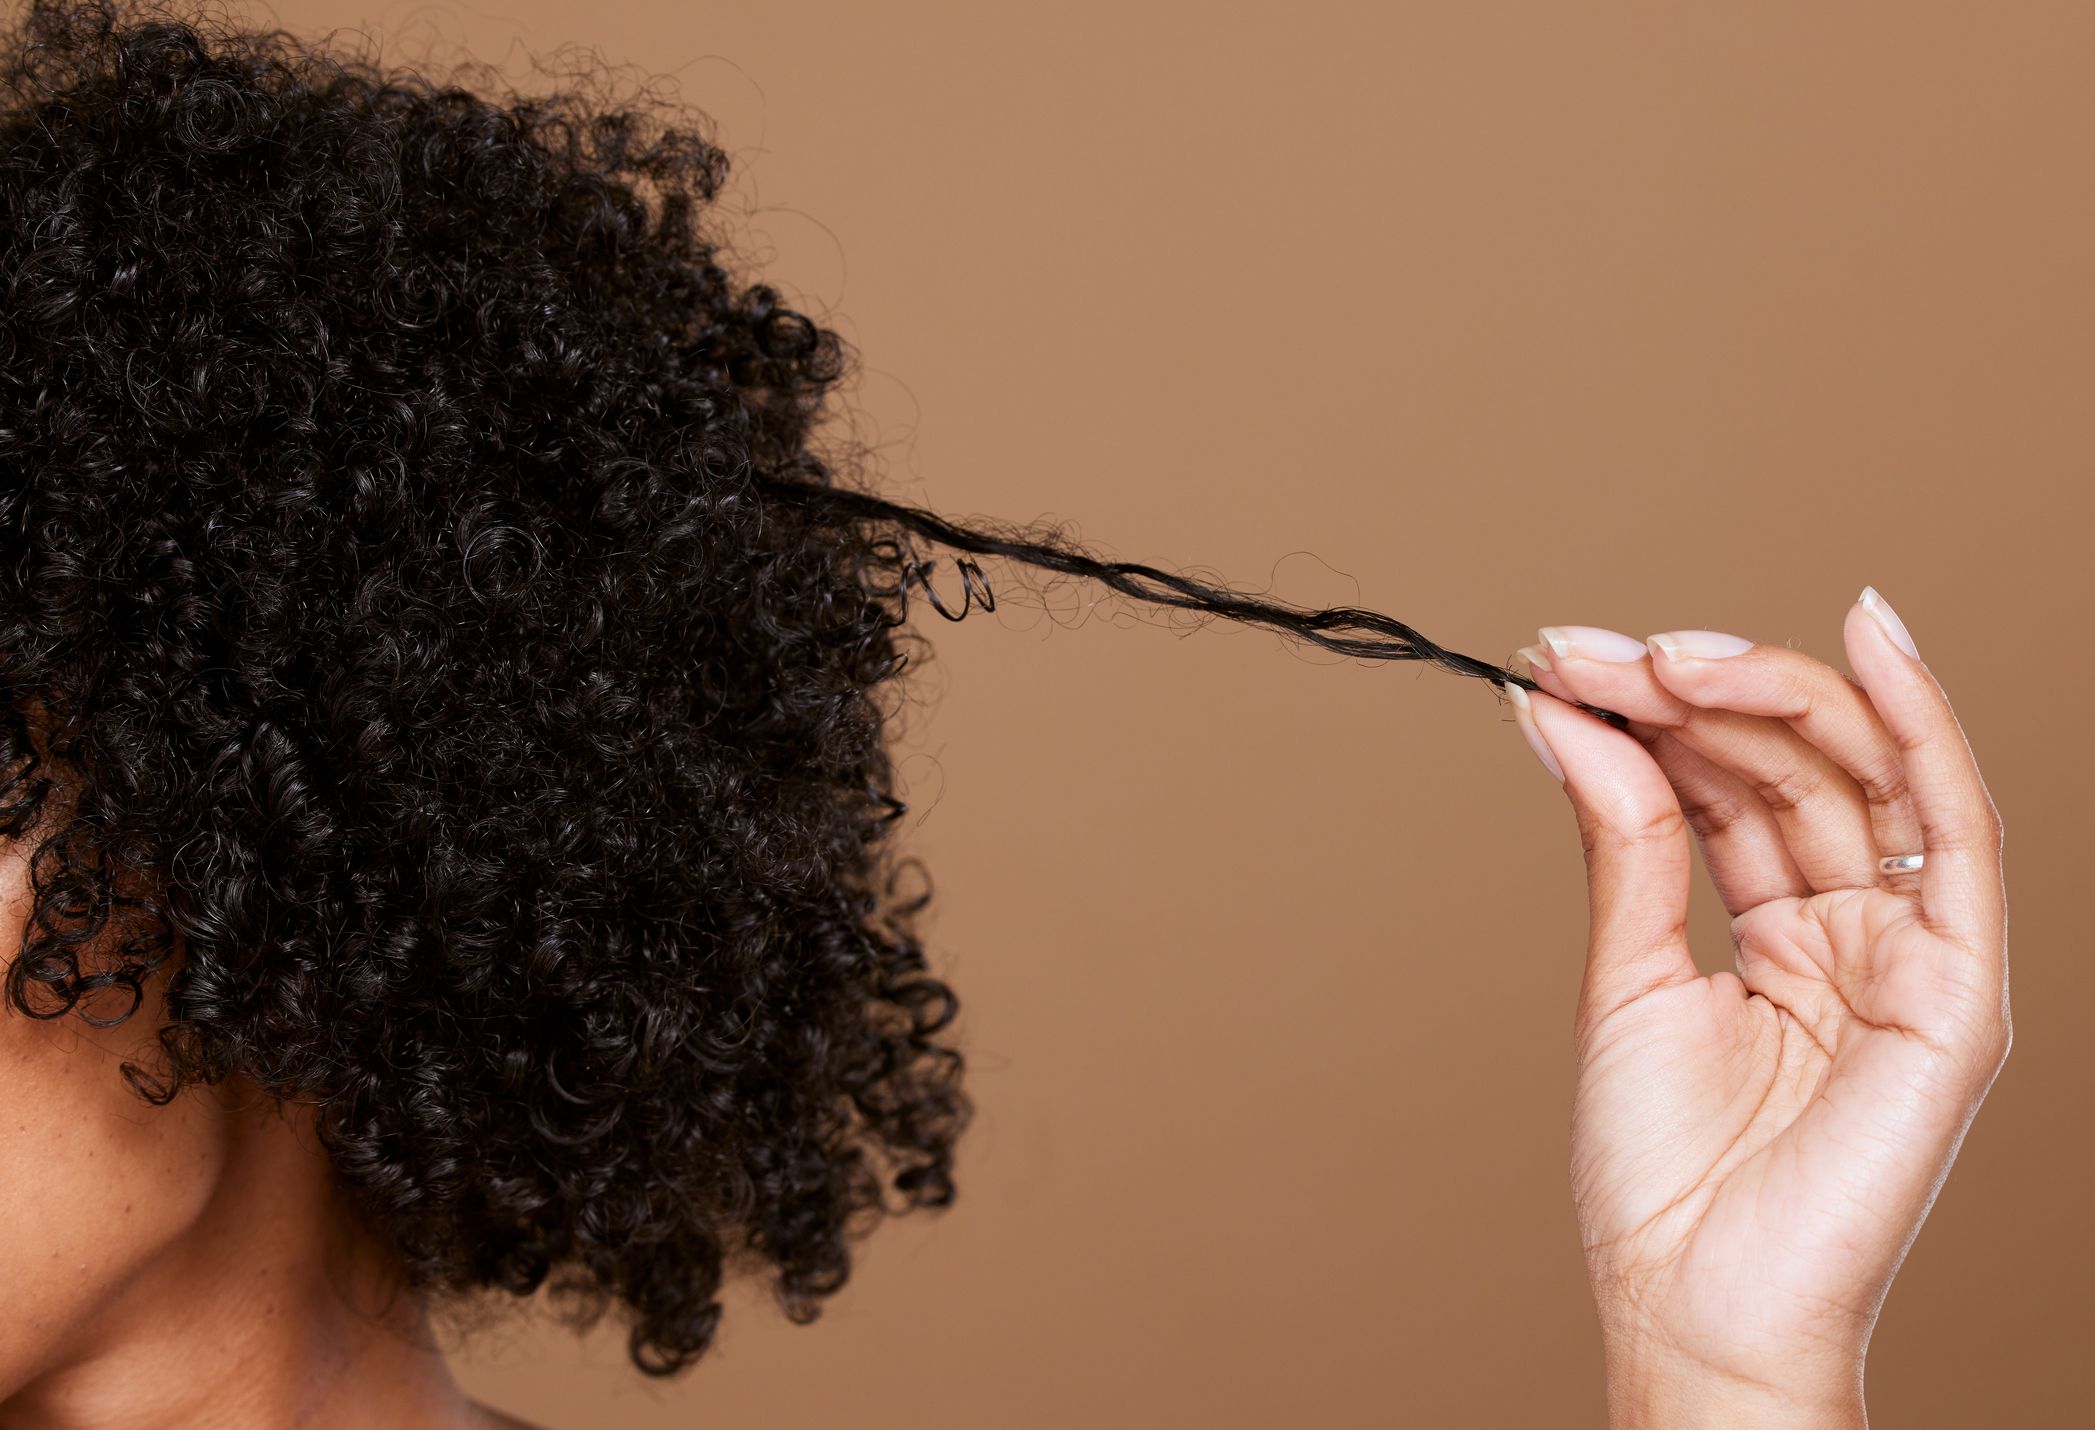 Mujer afro estira un mechón de pelo con su mano